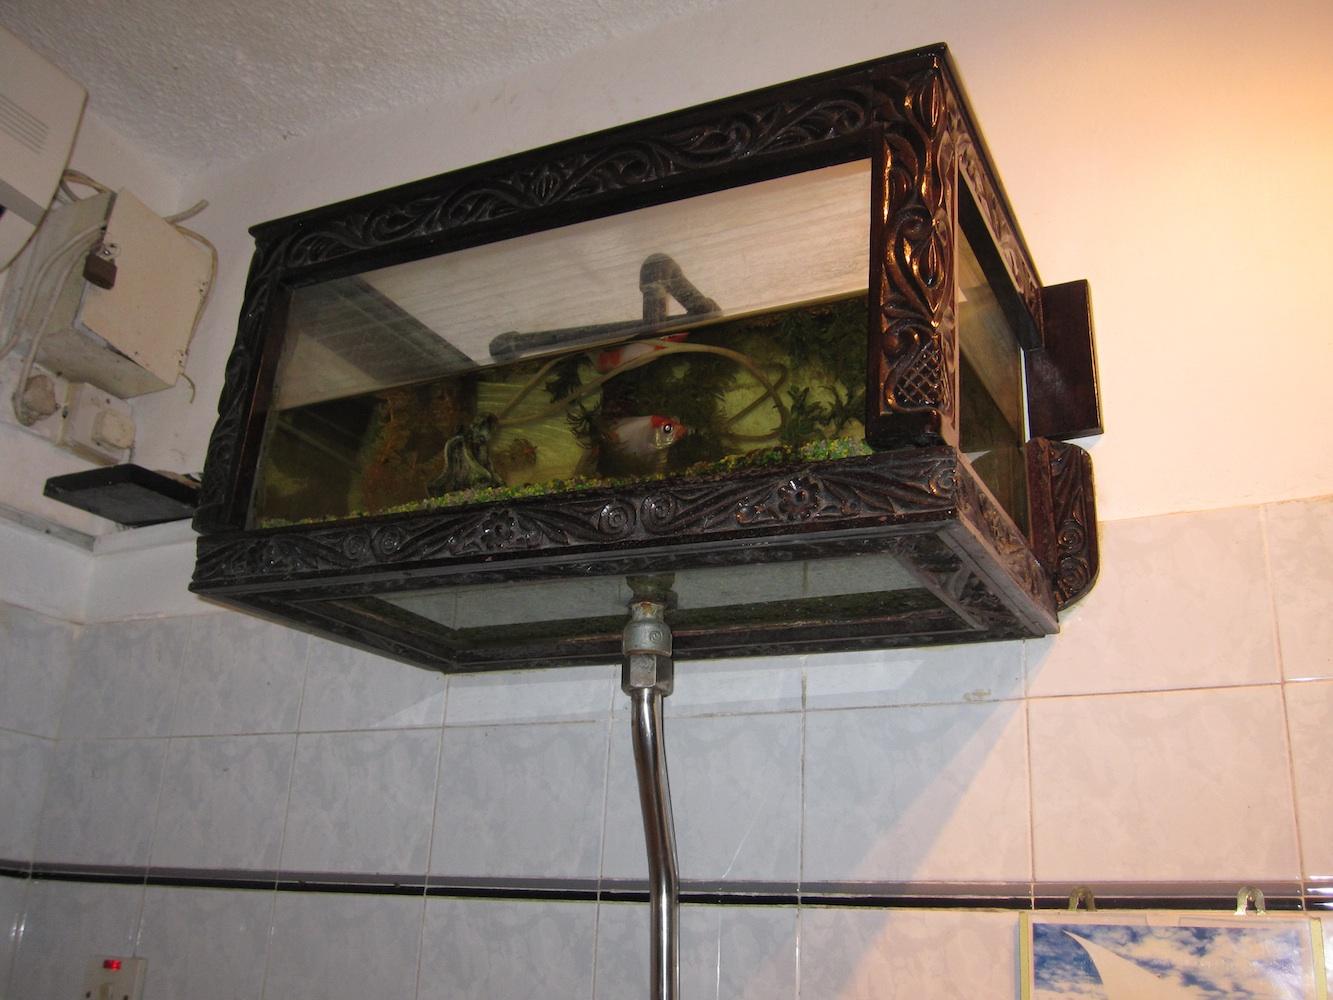 Fish tank toilet